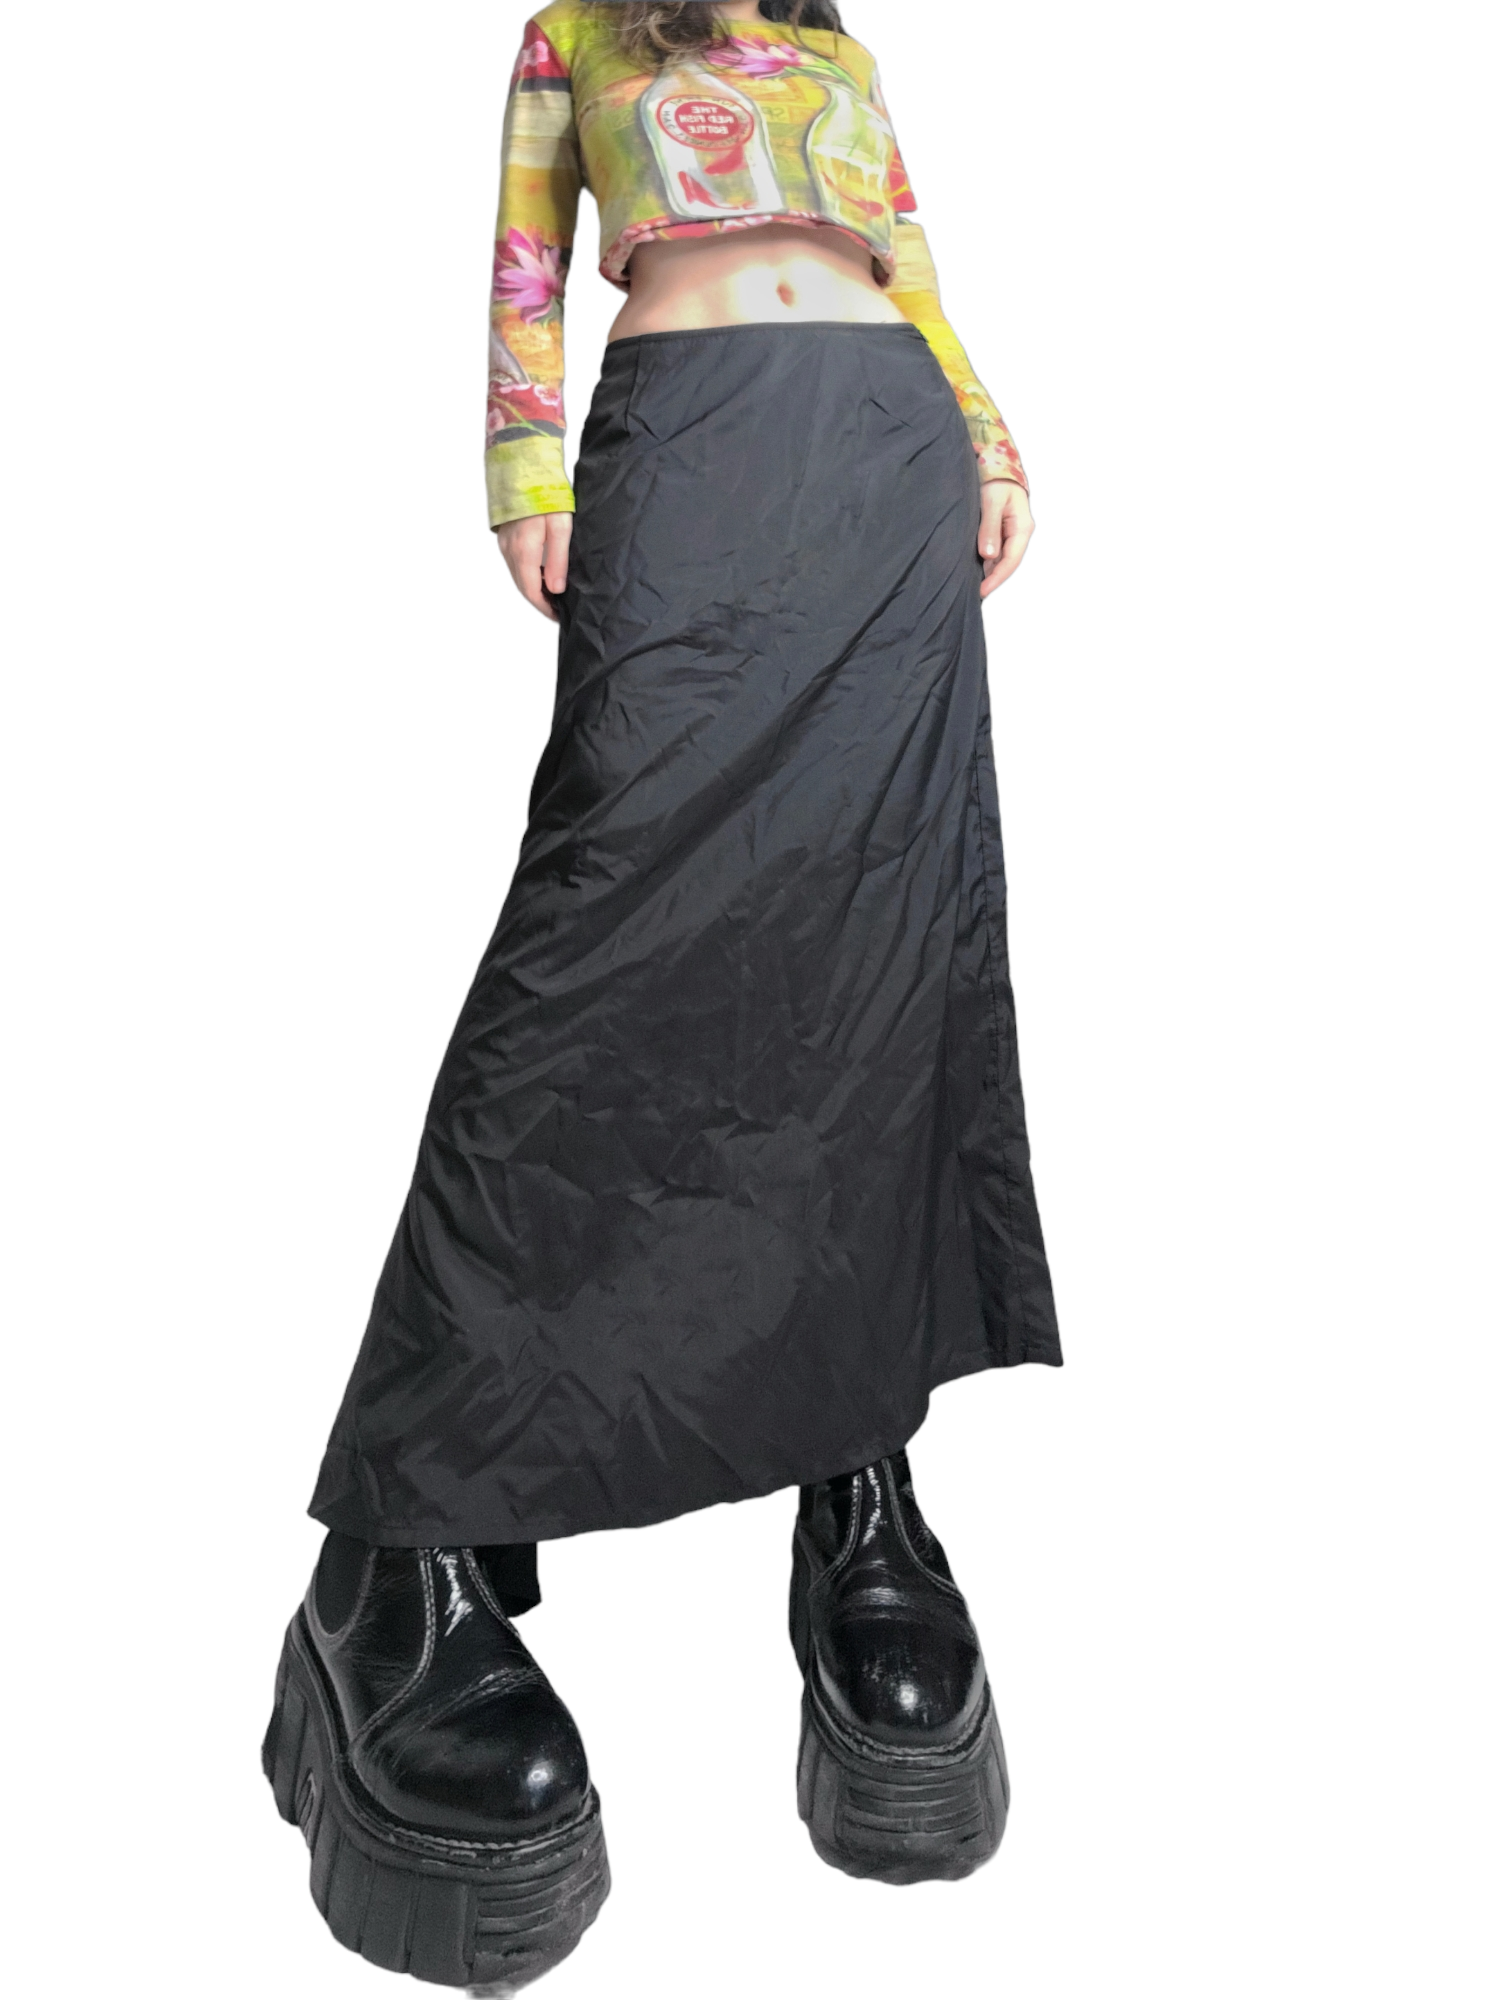 Maxi skirt harajuku gorpcore vintage noire subversive style cybery2k cop copine asymetric